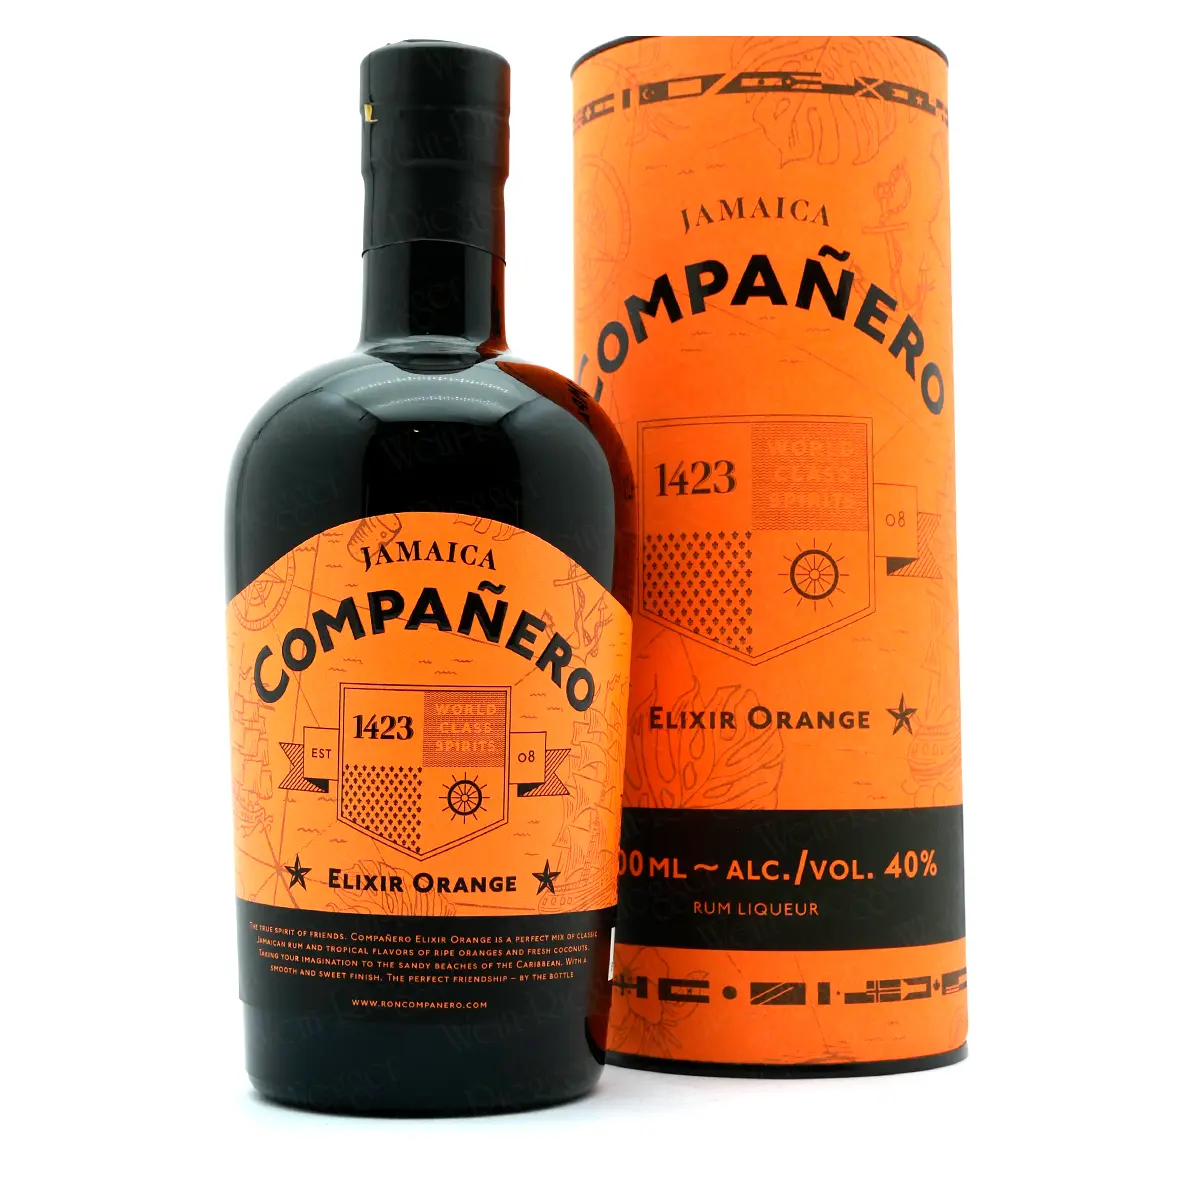 Companero Jamaica Elixir Orange